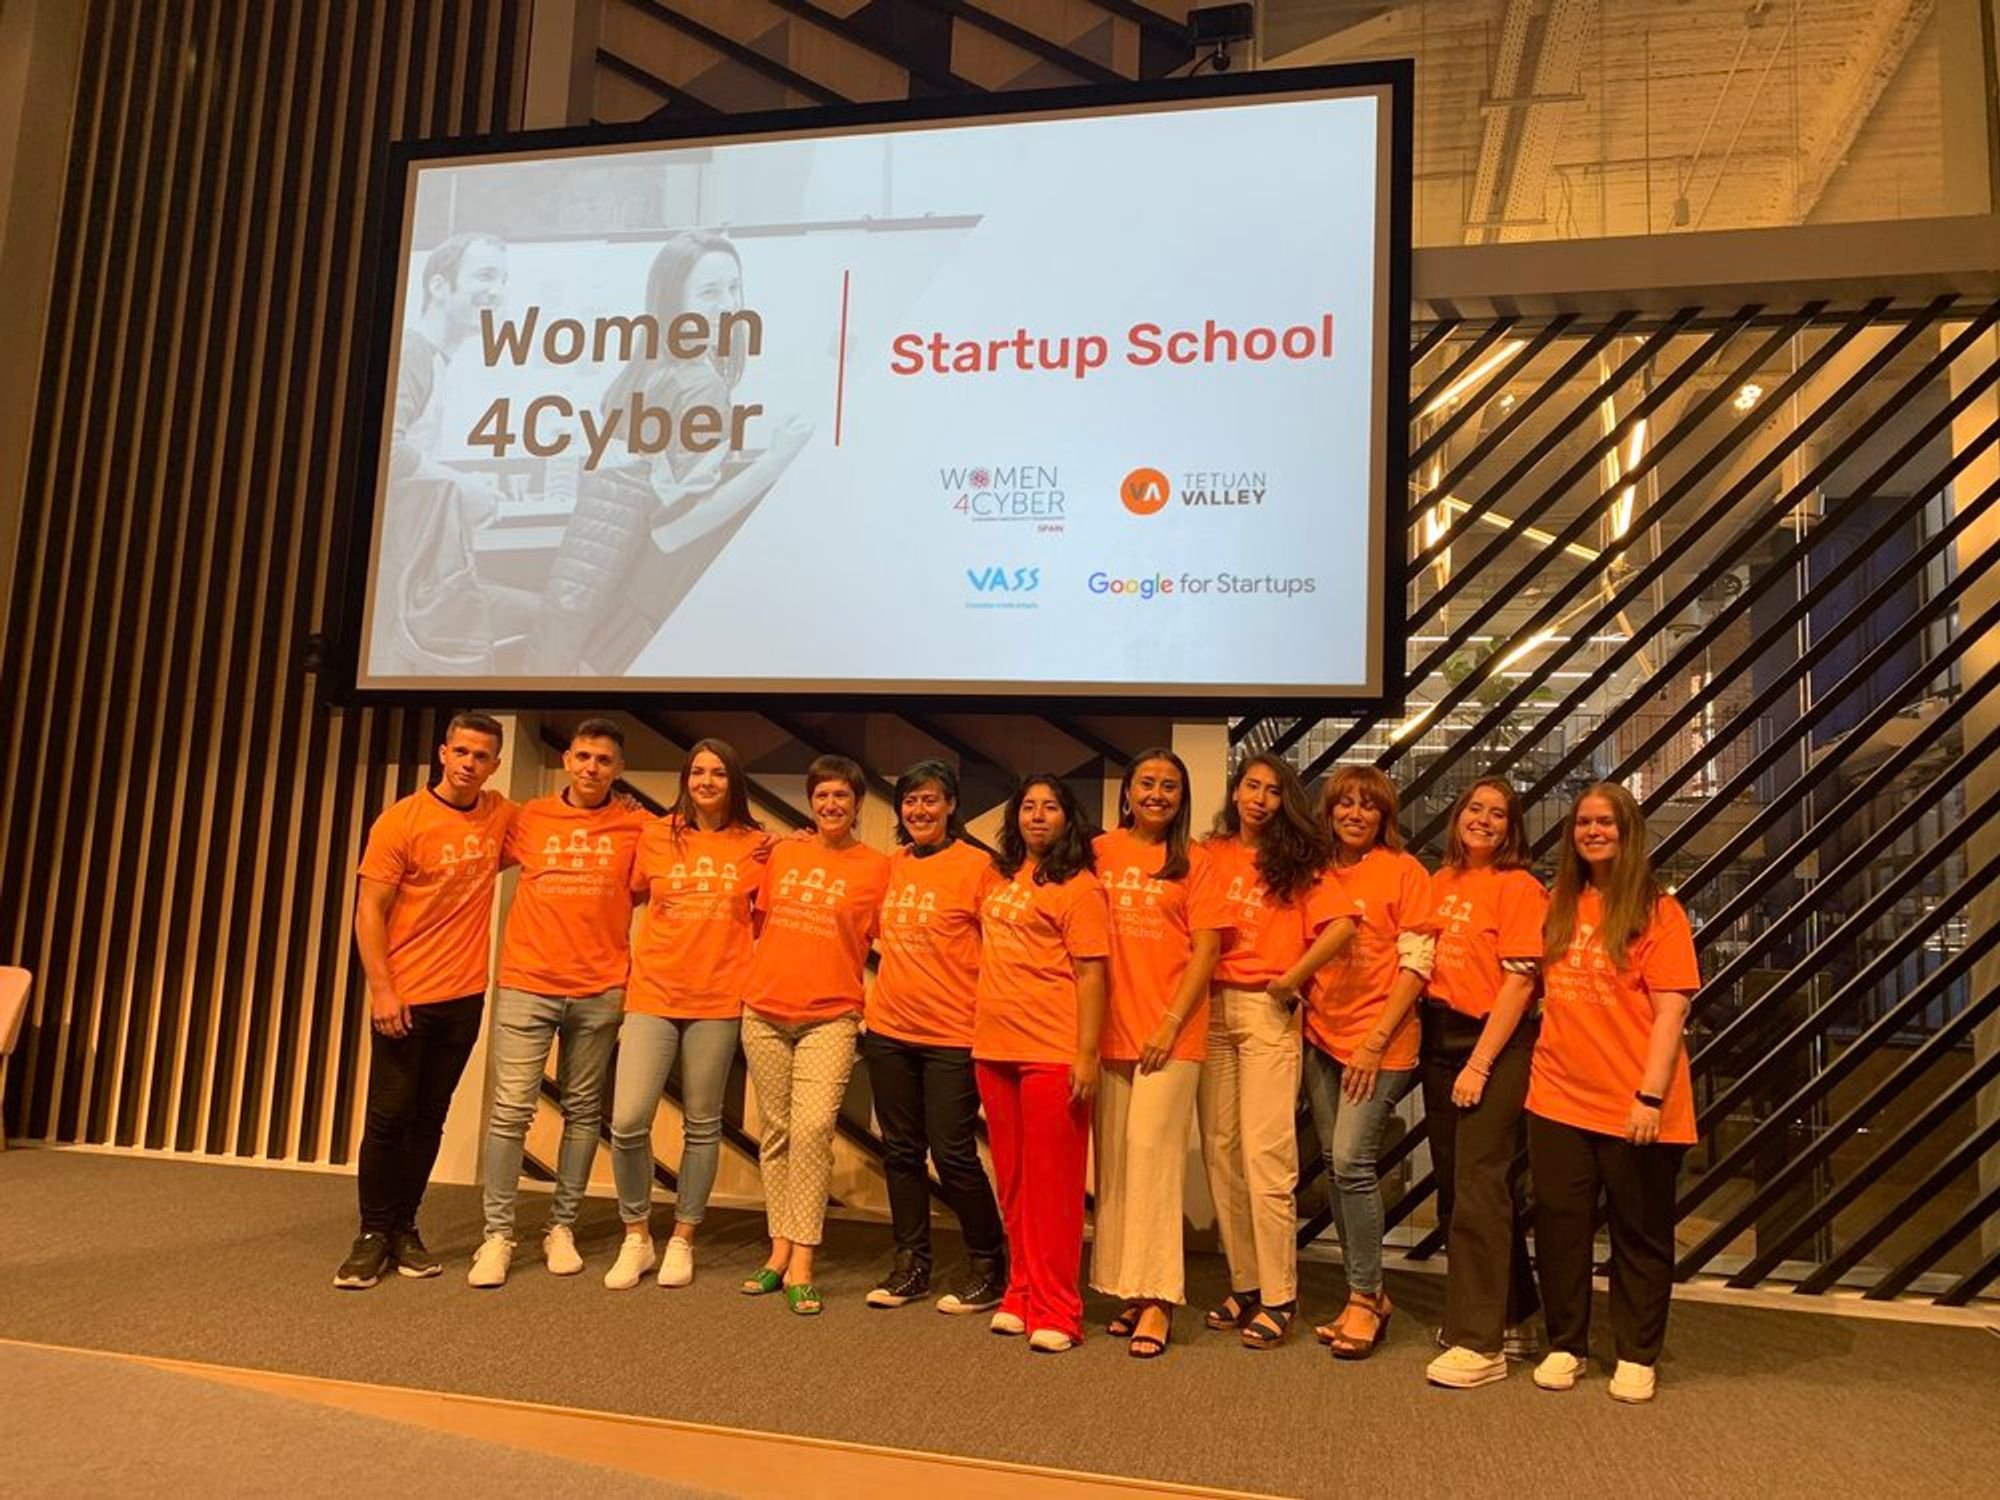 Diversity at the women 4Cyber startup school in Tetuan Valley